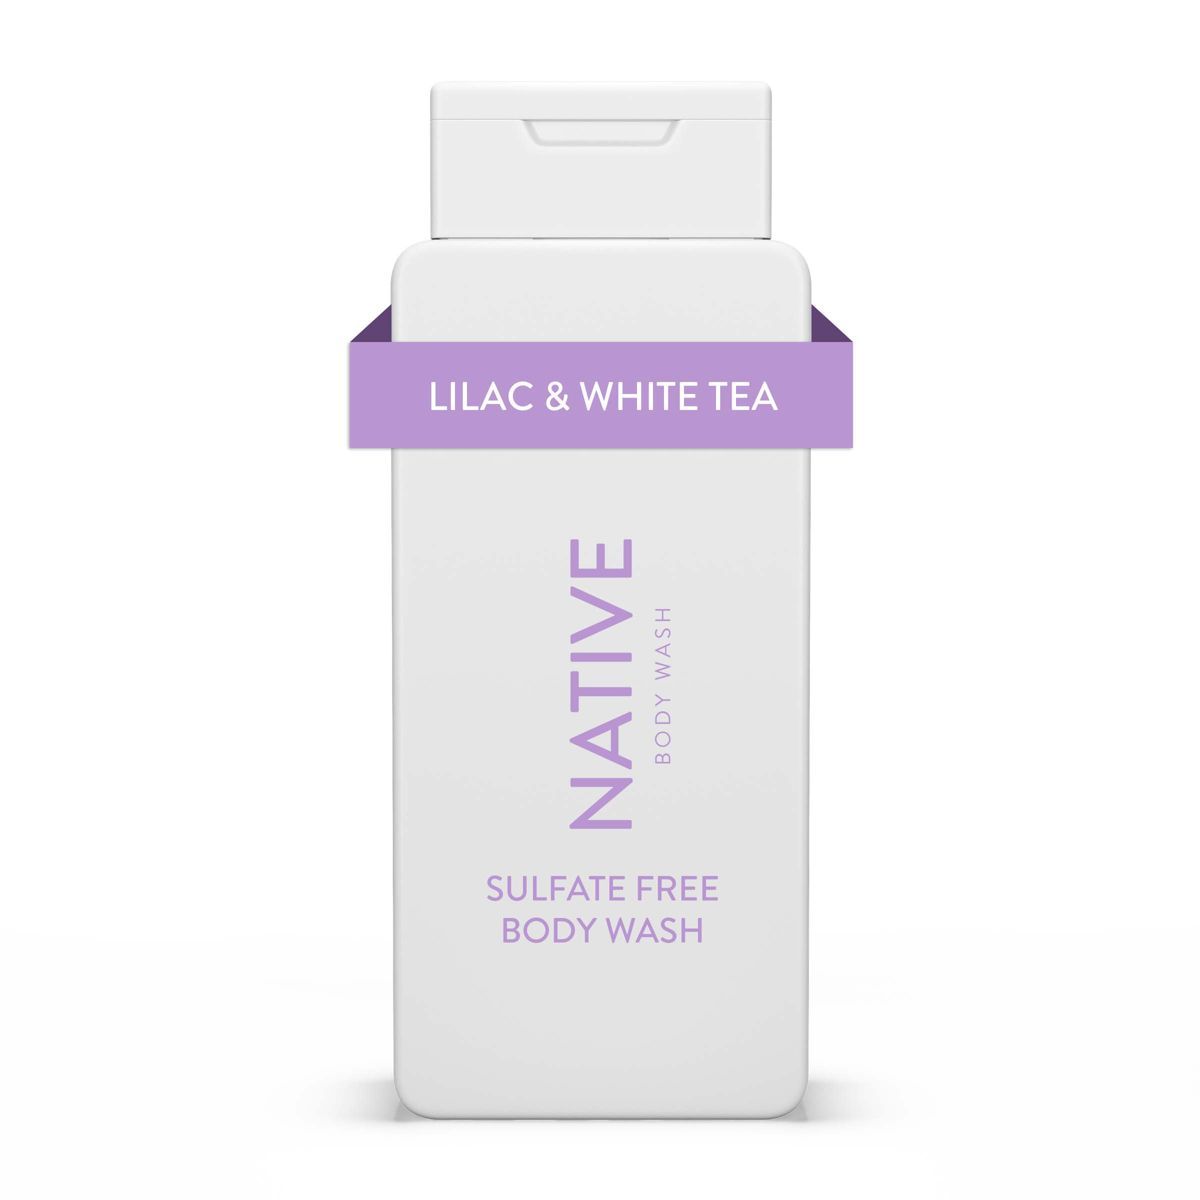 Native Body Wash - Lilac & White Tea - Sulfate Free - 18 fl oz | Target